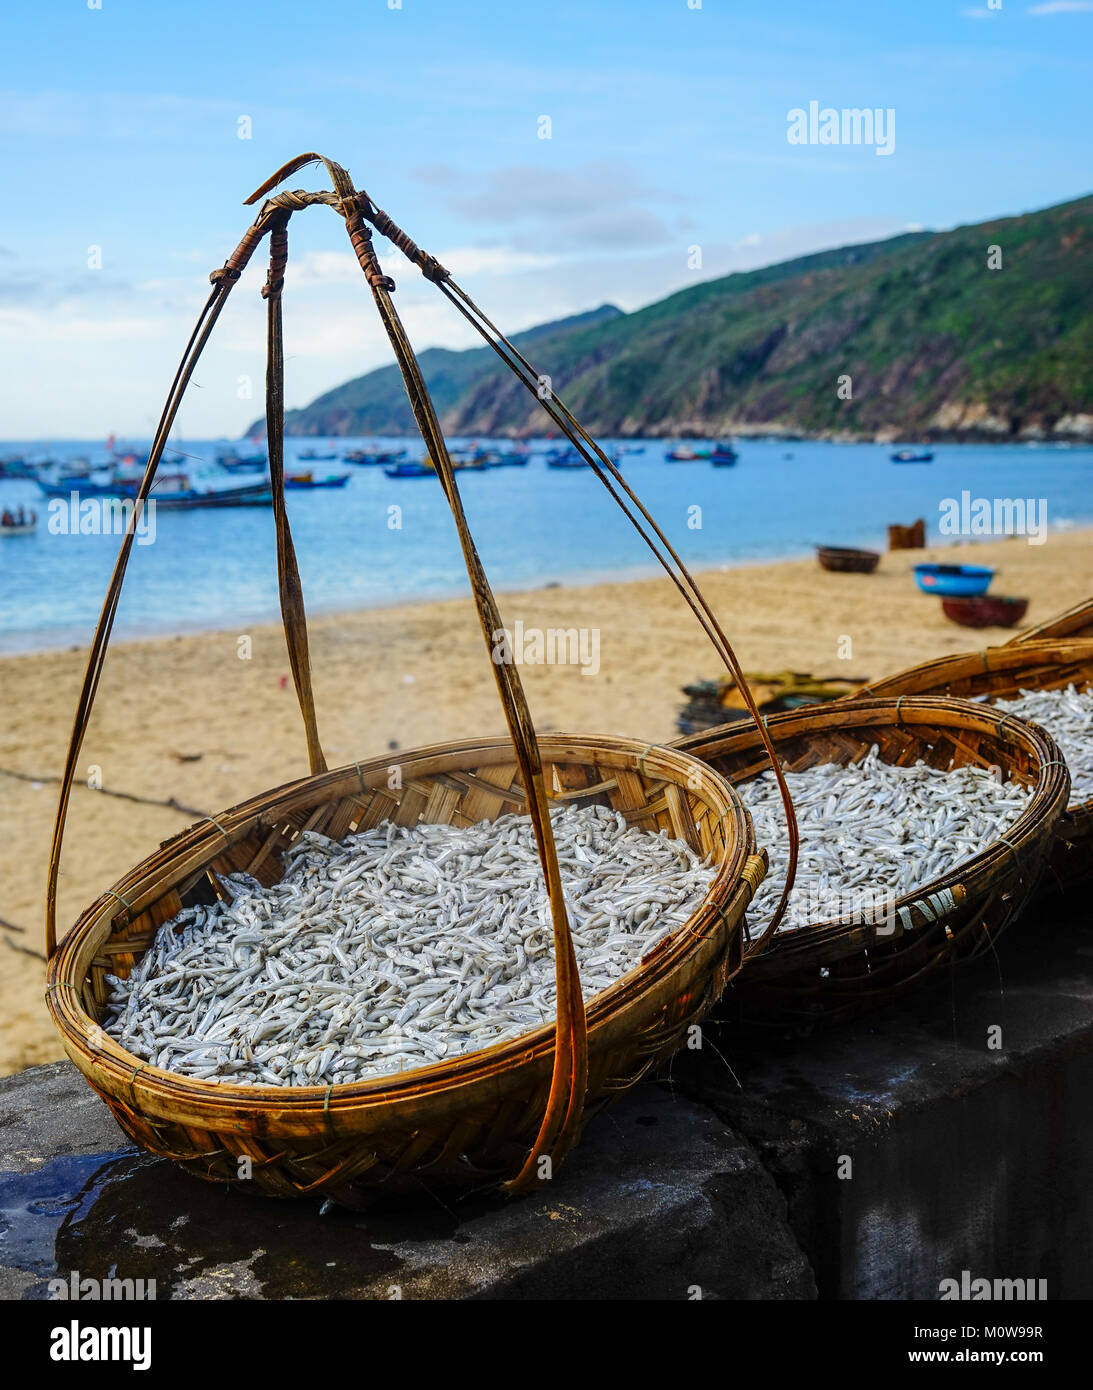 Bamboo baskets of fish on beach in Qui Nhon, South Coast of Vietnam. Stock Photo